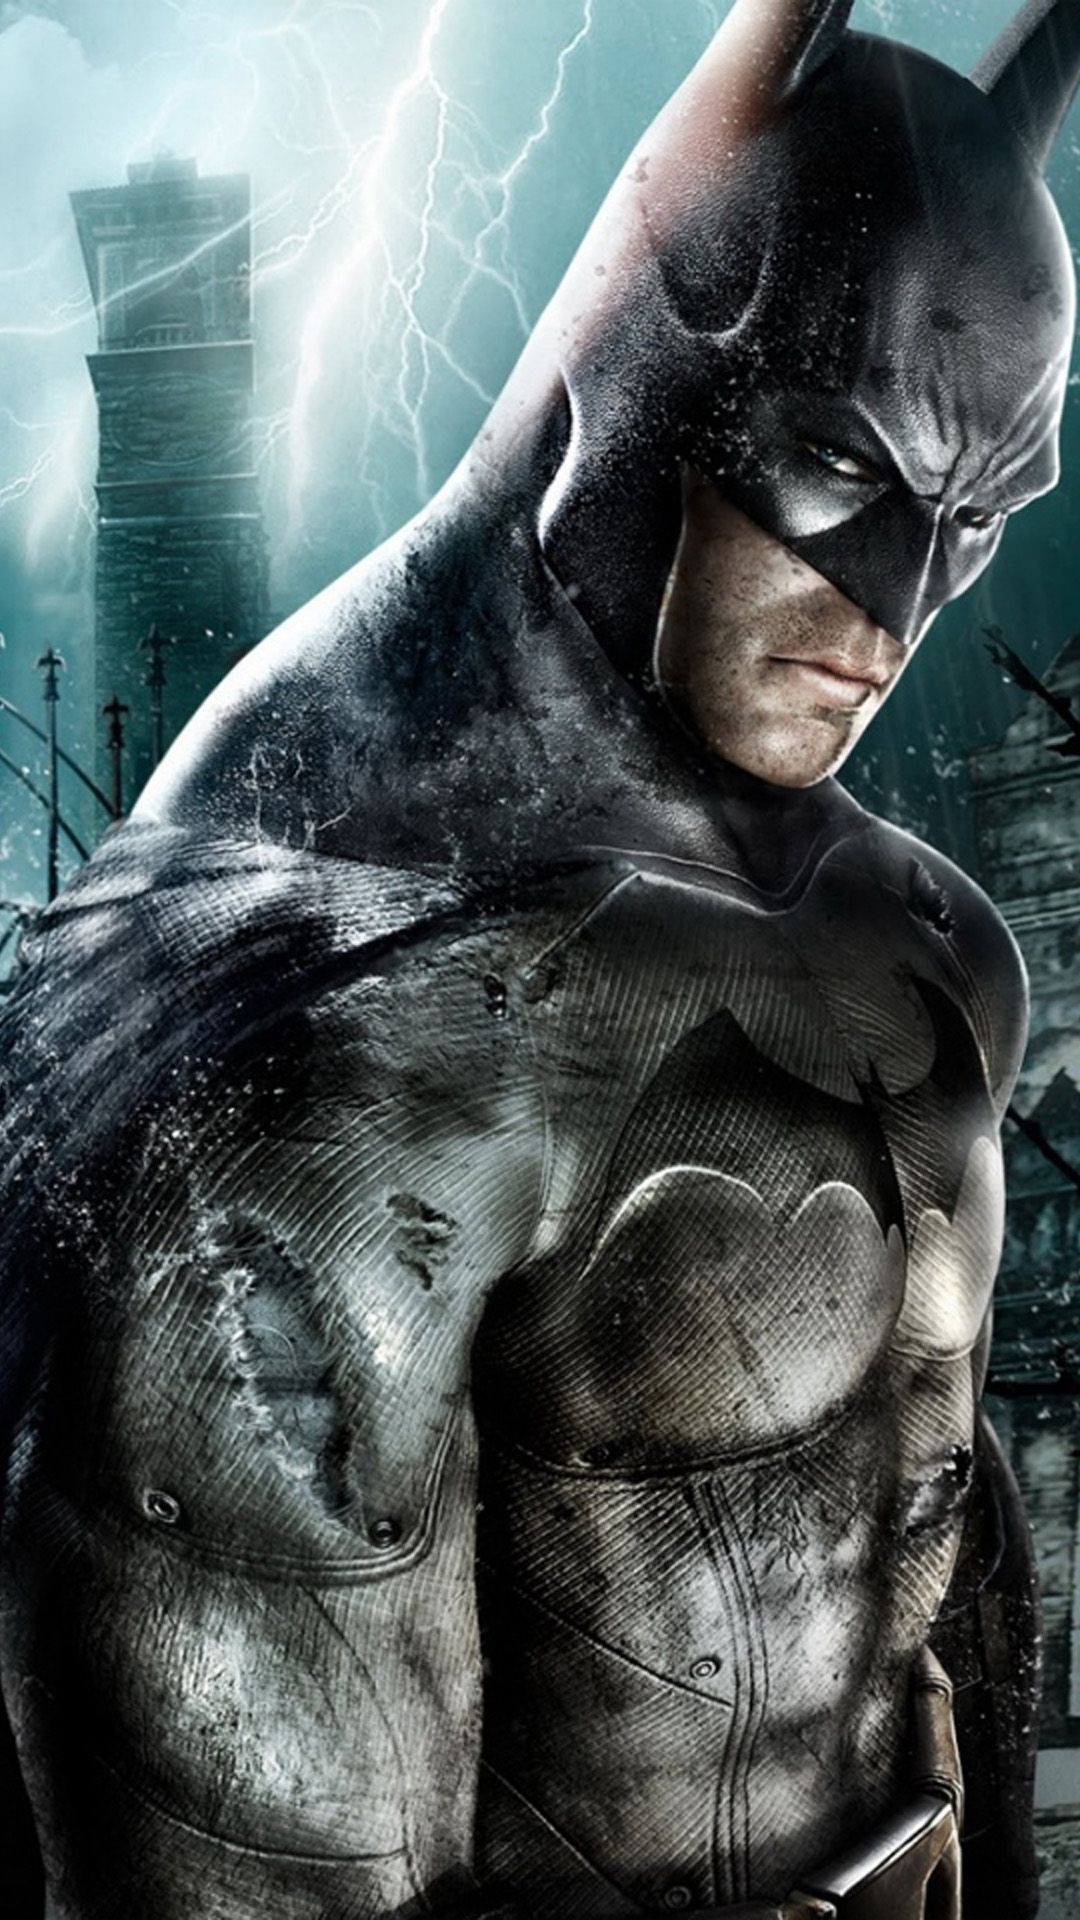 Batman HD Wallpaper For Android